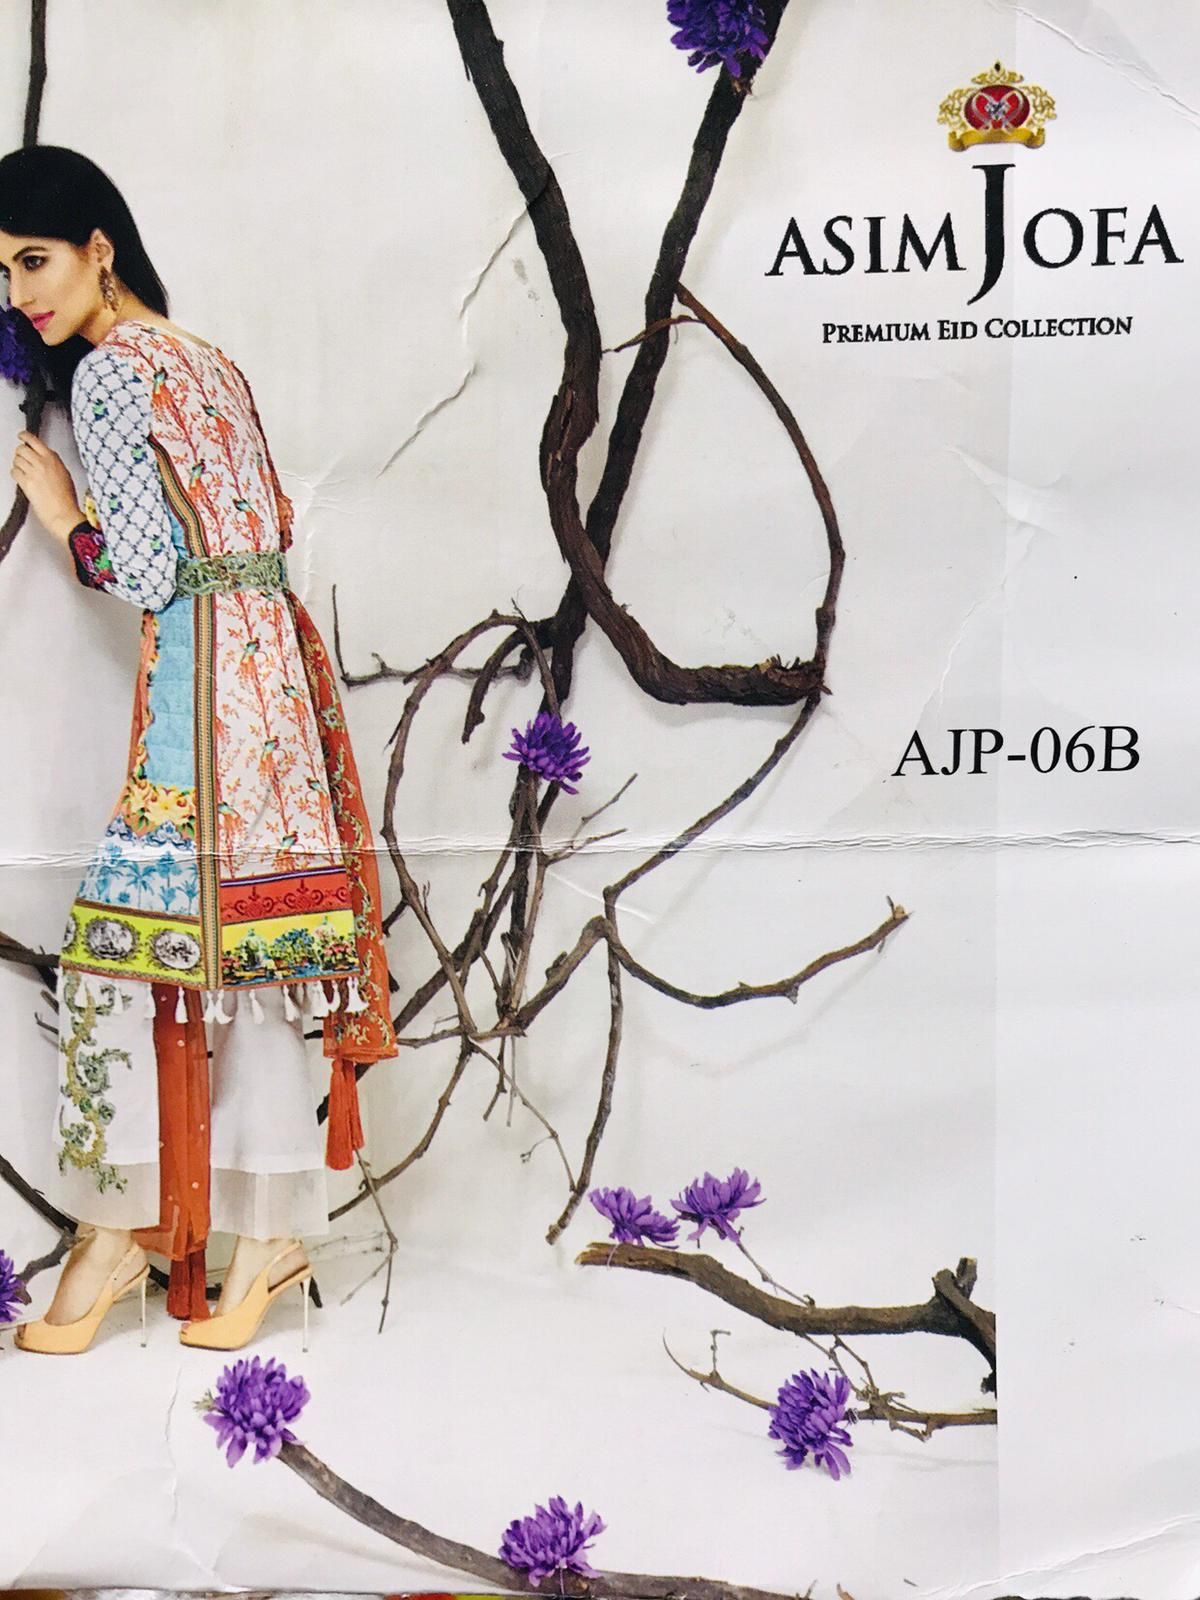 Asim jofa original /faraz mana original designer stitched dress size small to medium